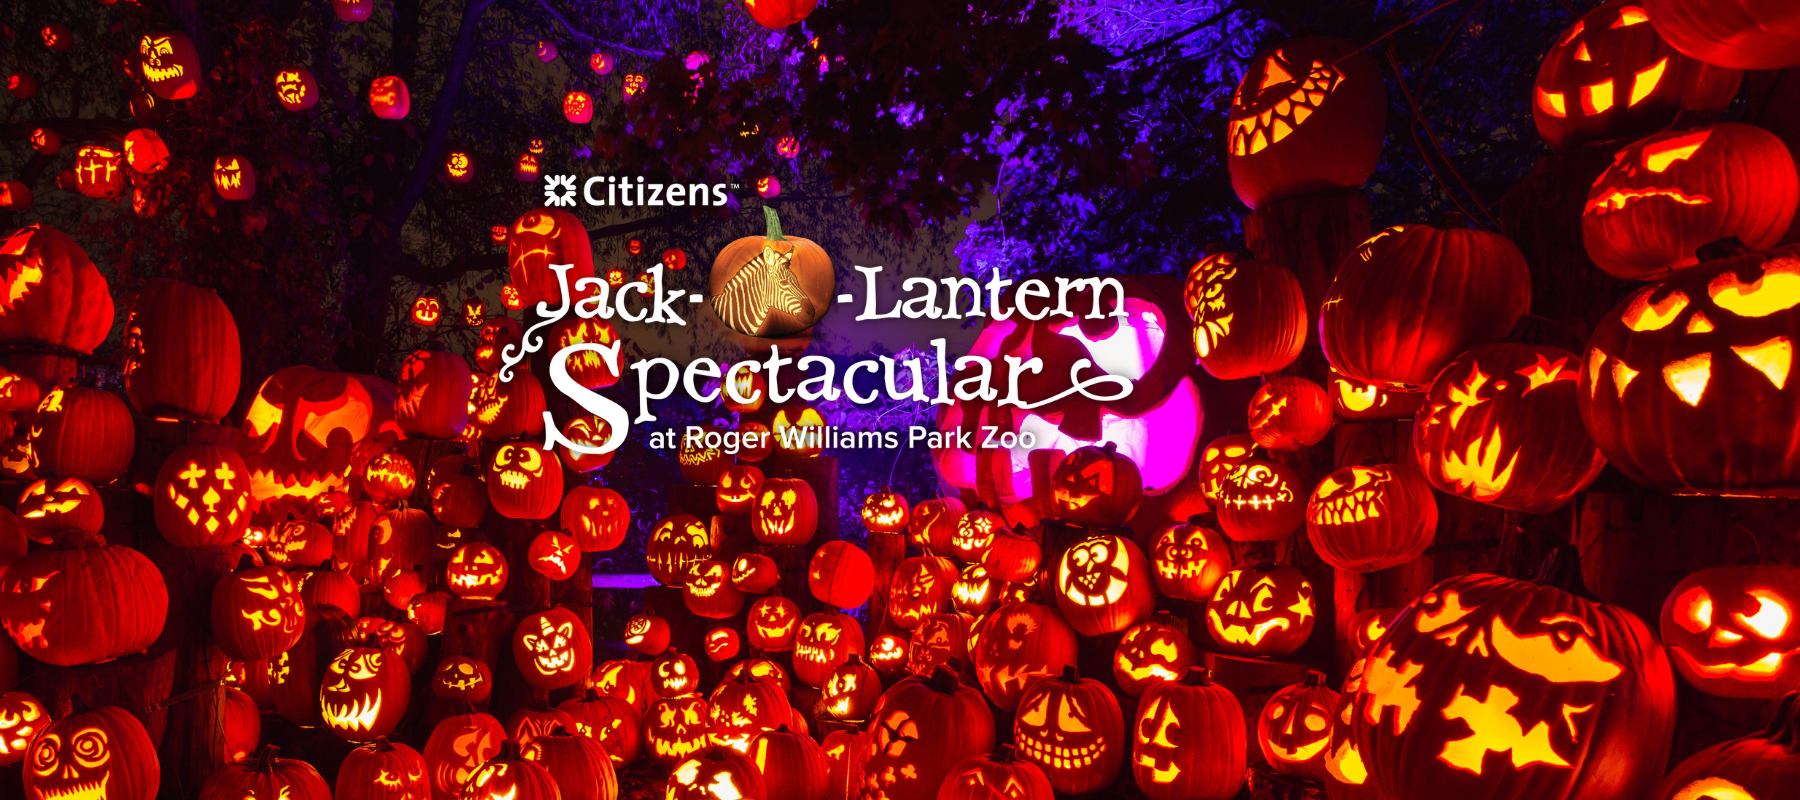 Jack-O-Lantern Spectacular - Roger Williams Park Zoo